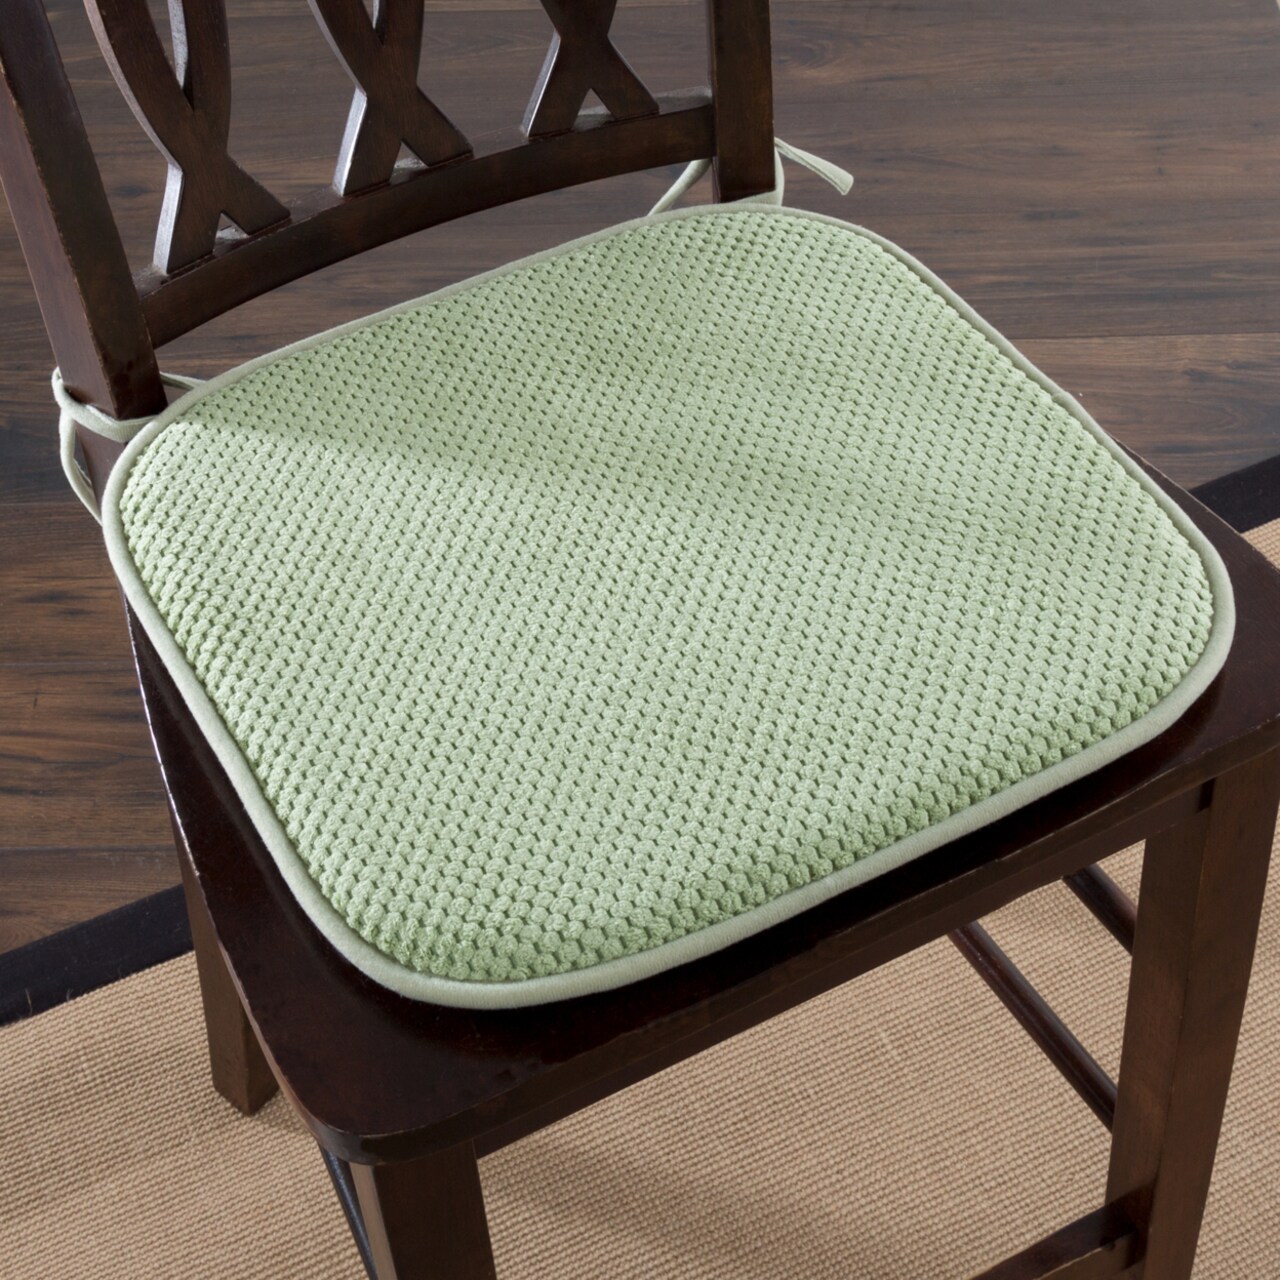 Lavish Home Memory Foam Chair Pad - Green